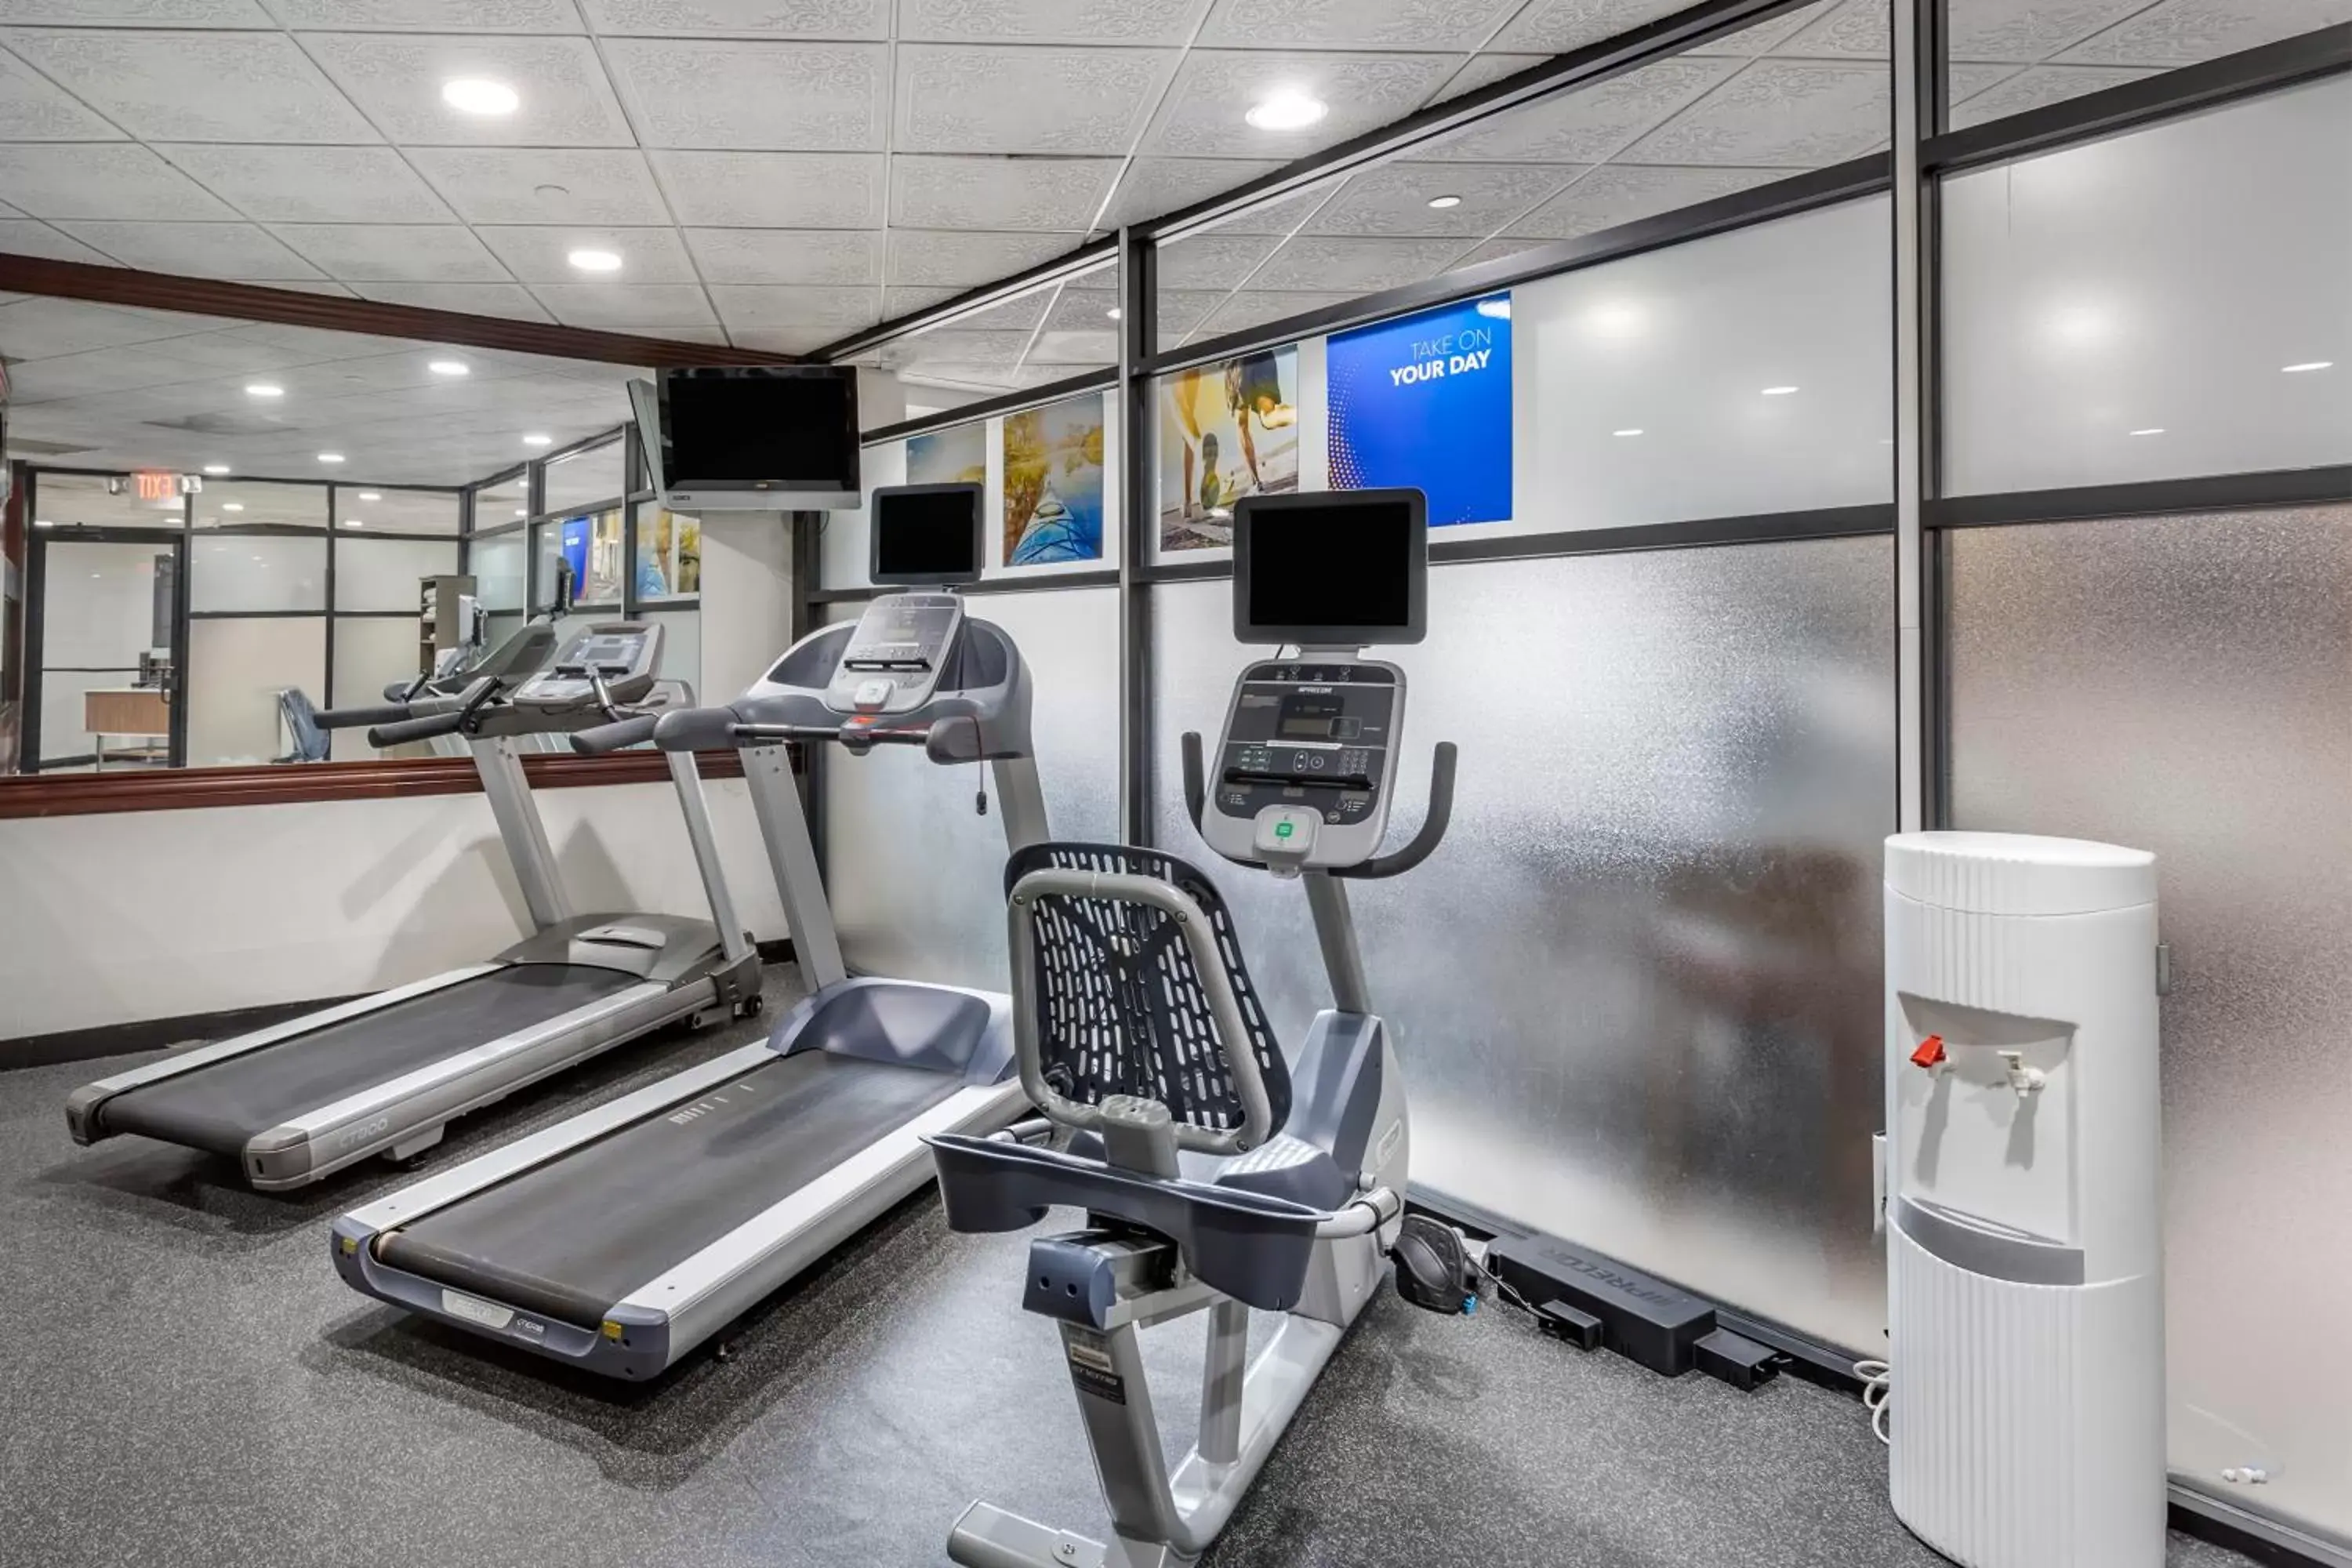 Fitness centre/facilities, Fitness Center/Facilities in Comfort Inn Paramus - Hackensack